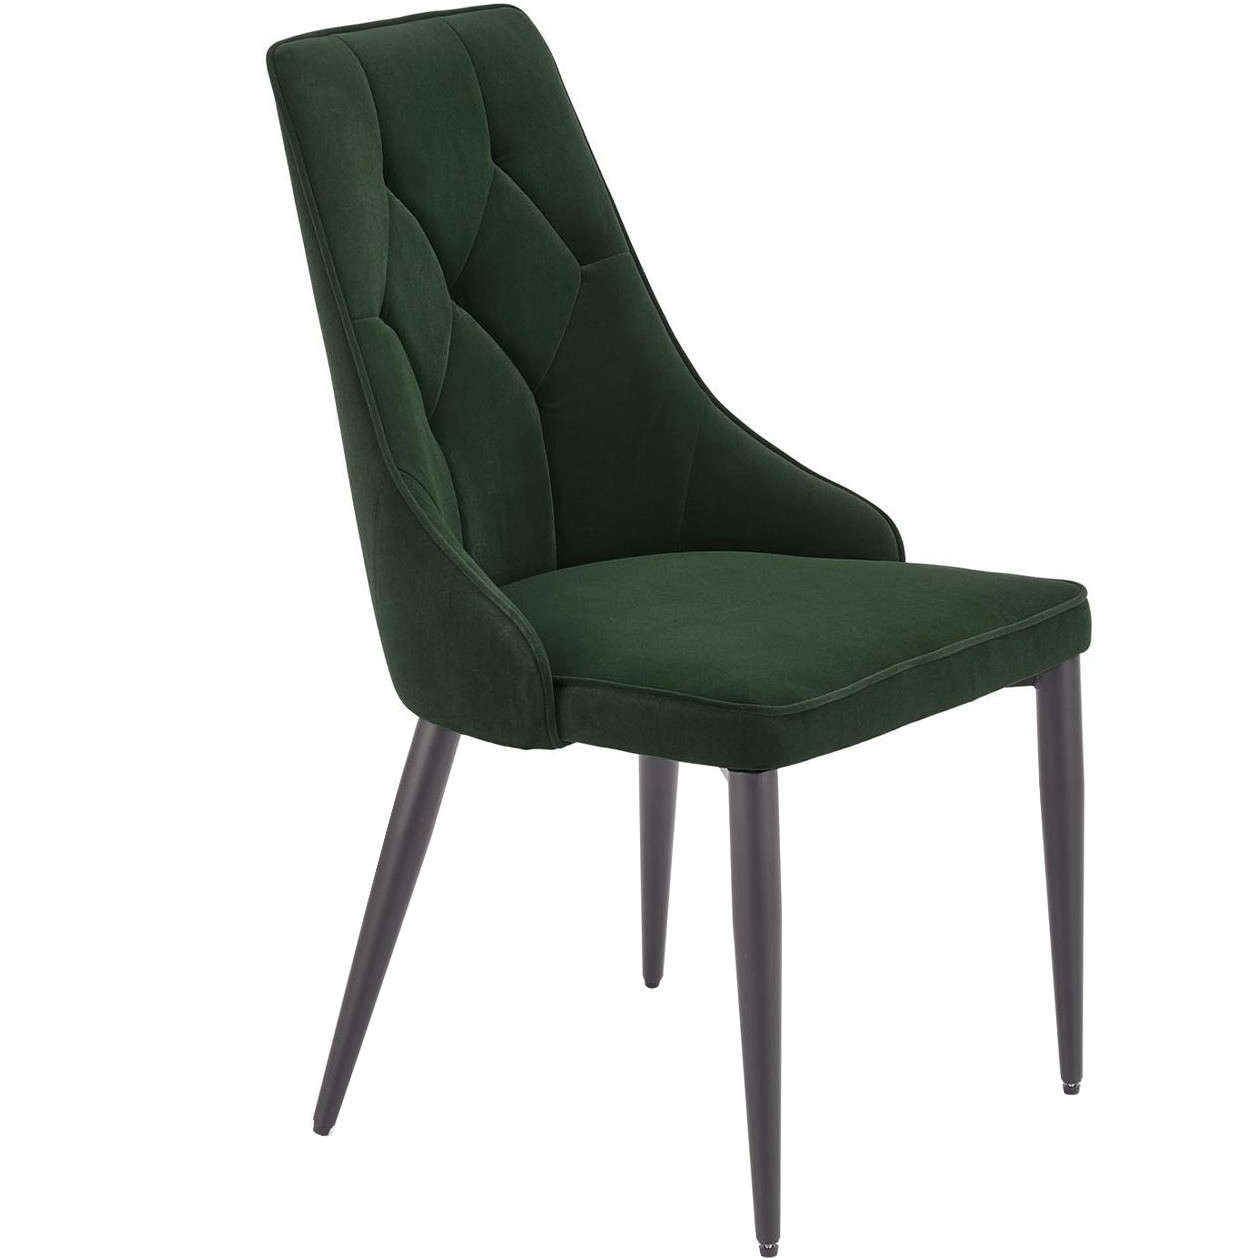 Chair K365 dark green